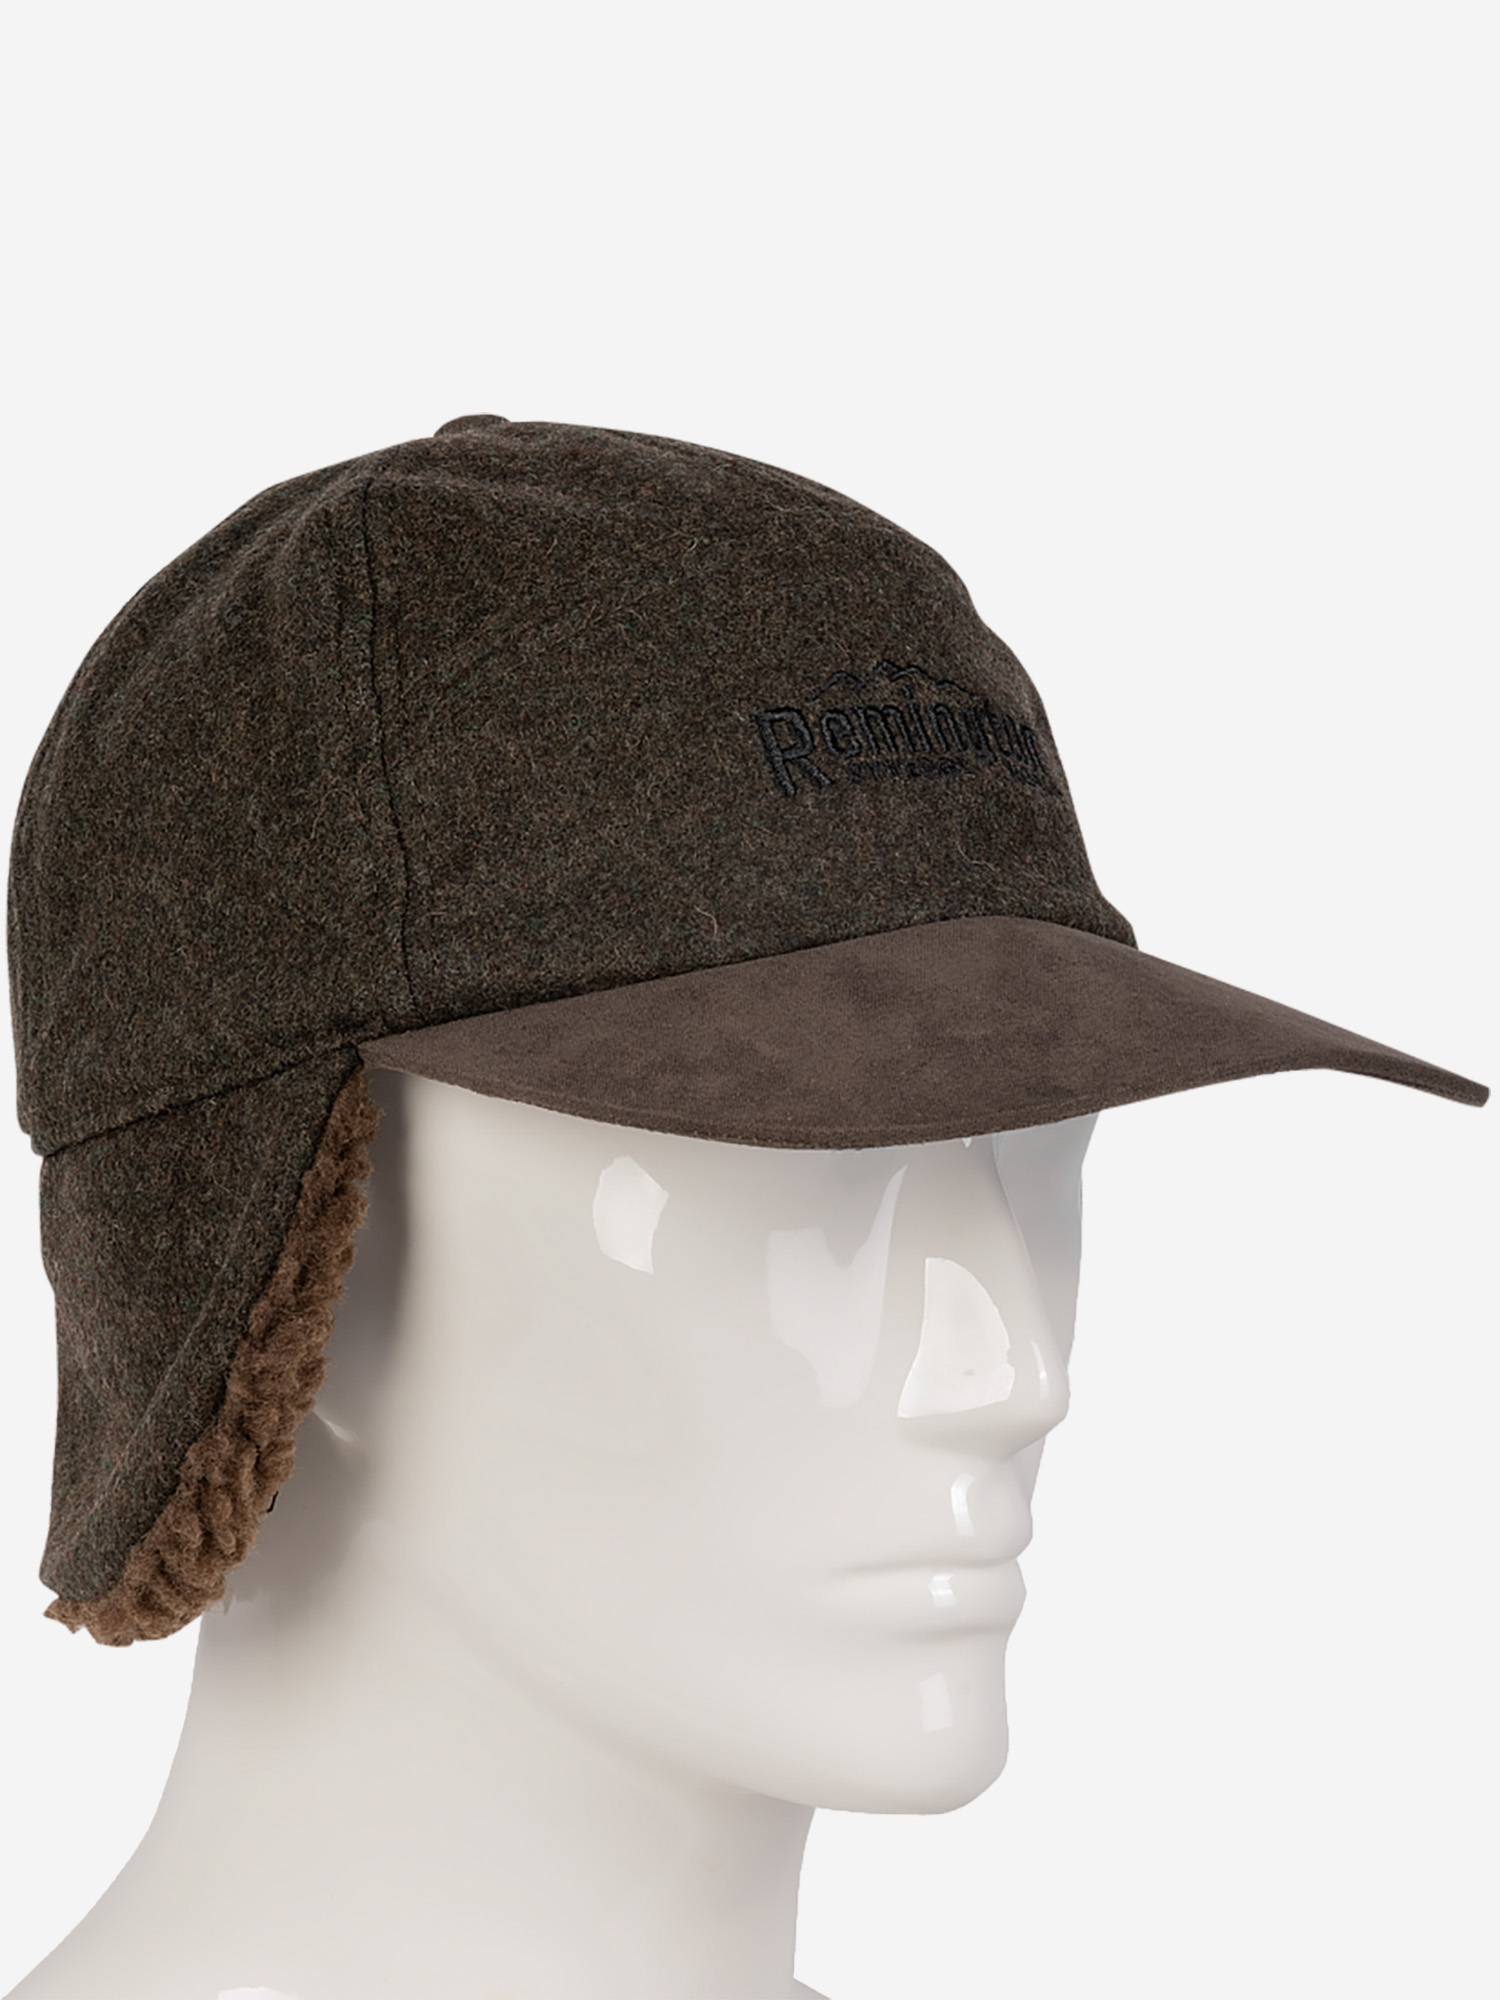 Шапка Remington Еarflaps baseball cap brown, Коричневый шапка remington еarflaps baseball cap brown коричневый